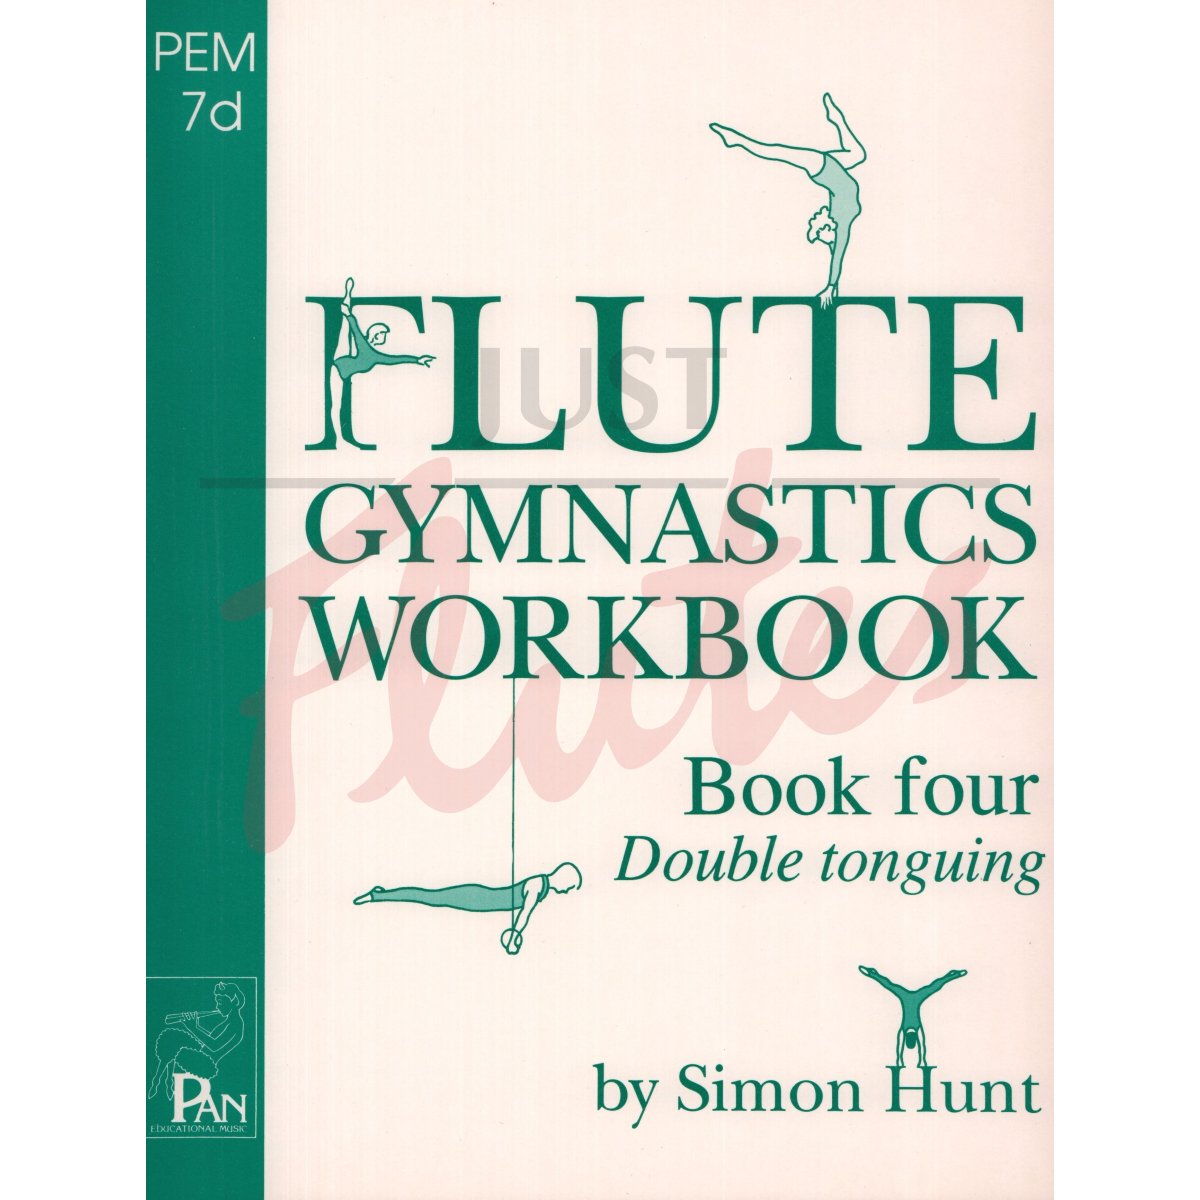 Flute Gymnastics Workbook - Double Tonguing